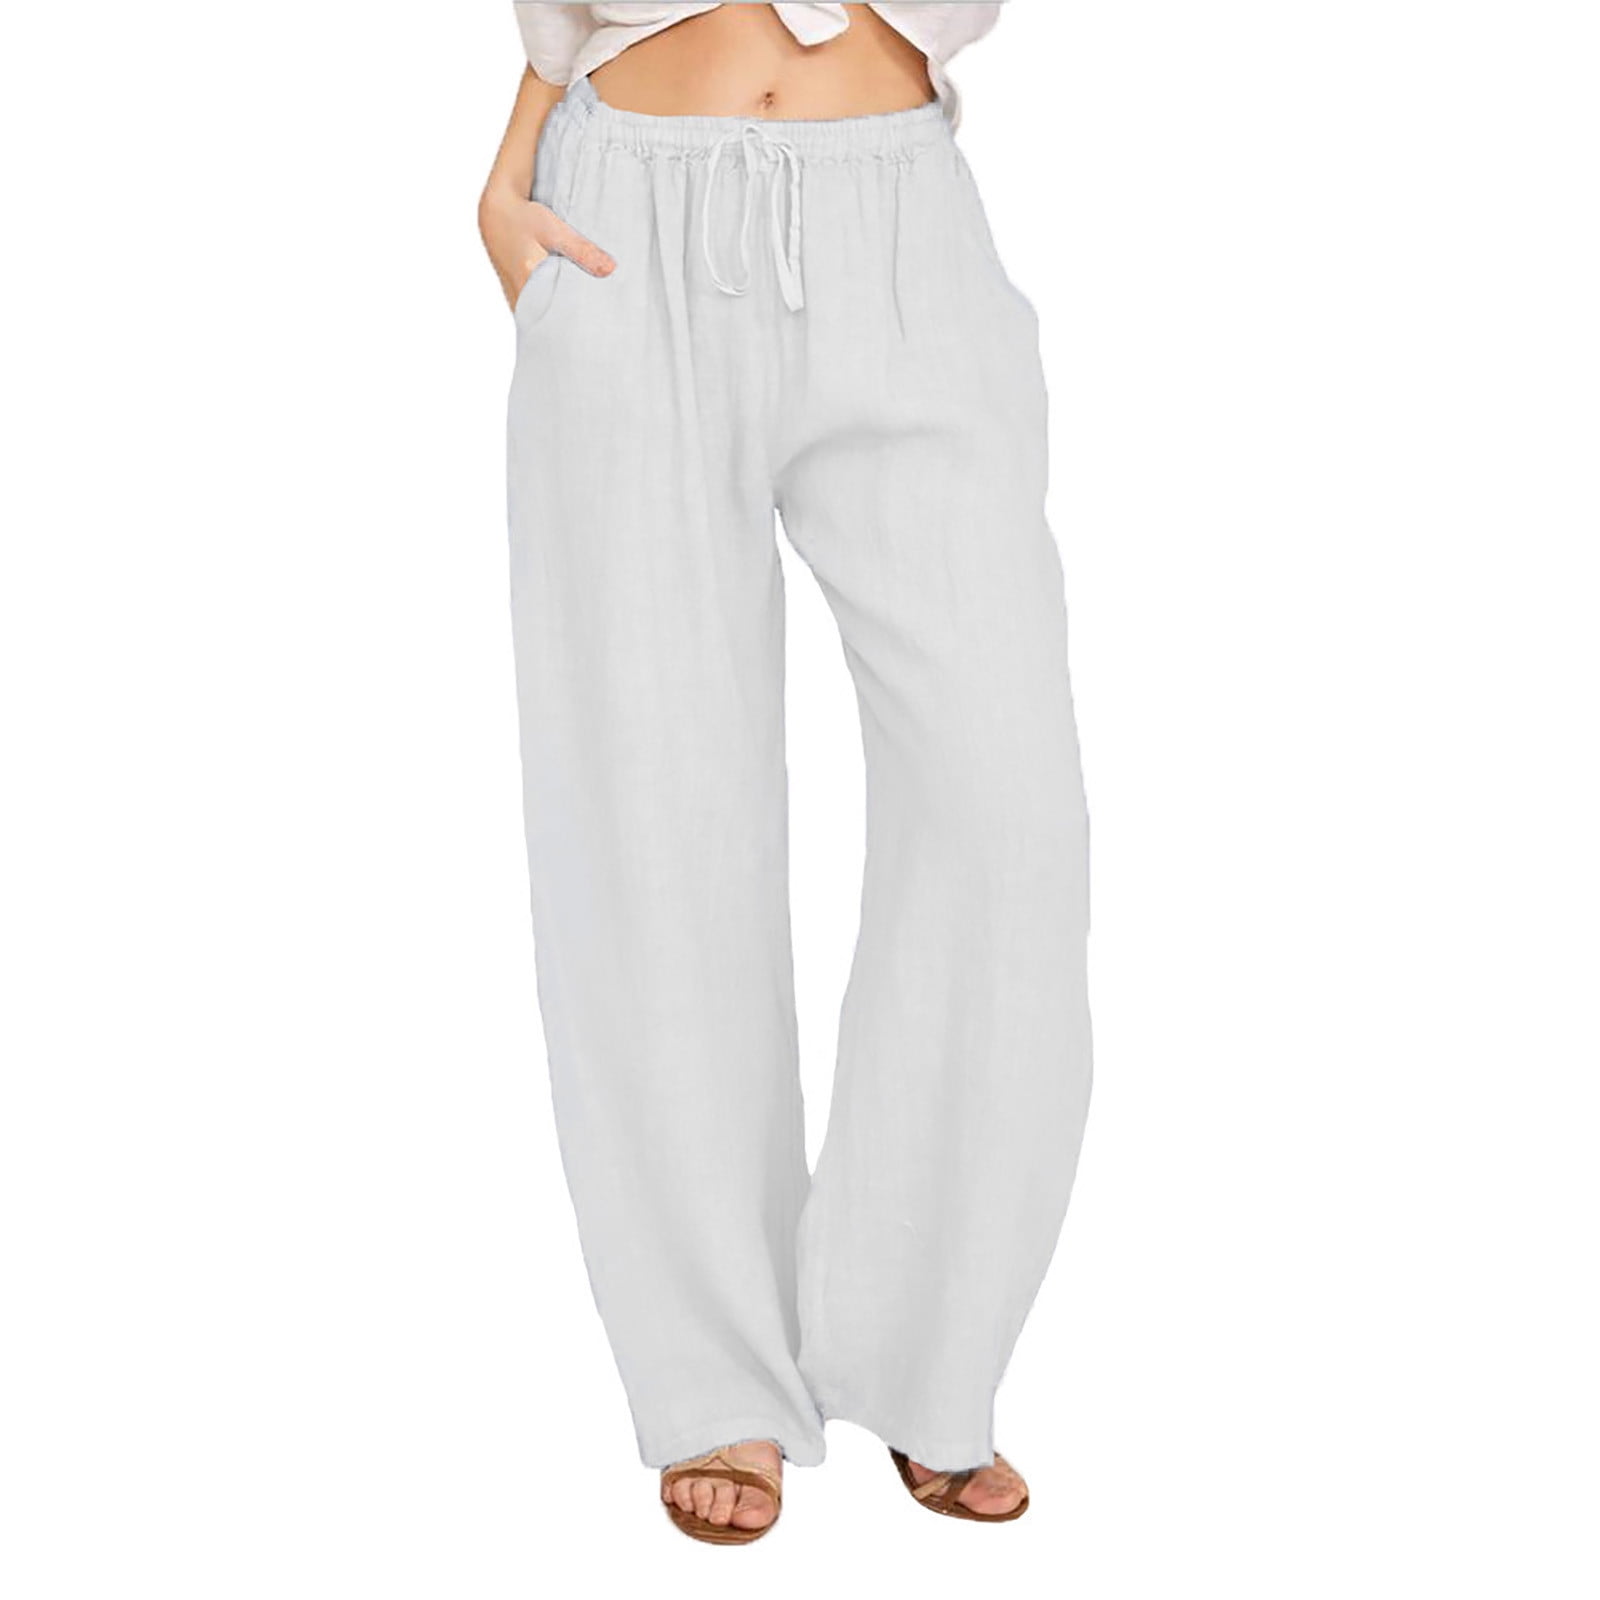 KIHOUT Clearance Women's Plus Size Pants Solid Cotton Linen Drawstring  Elastic Waist Long Wide Leg Pants 